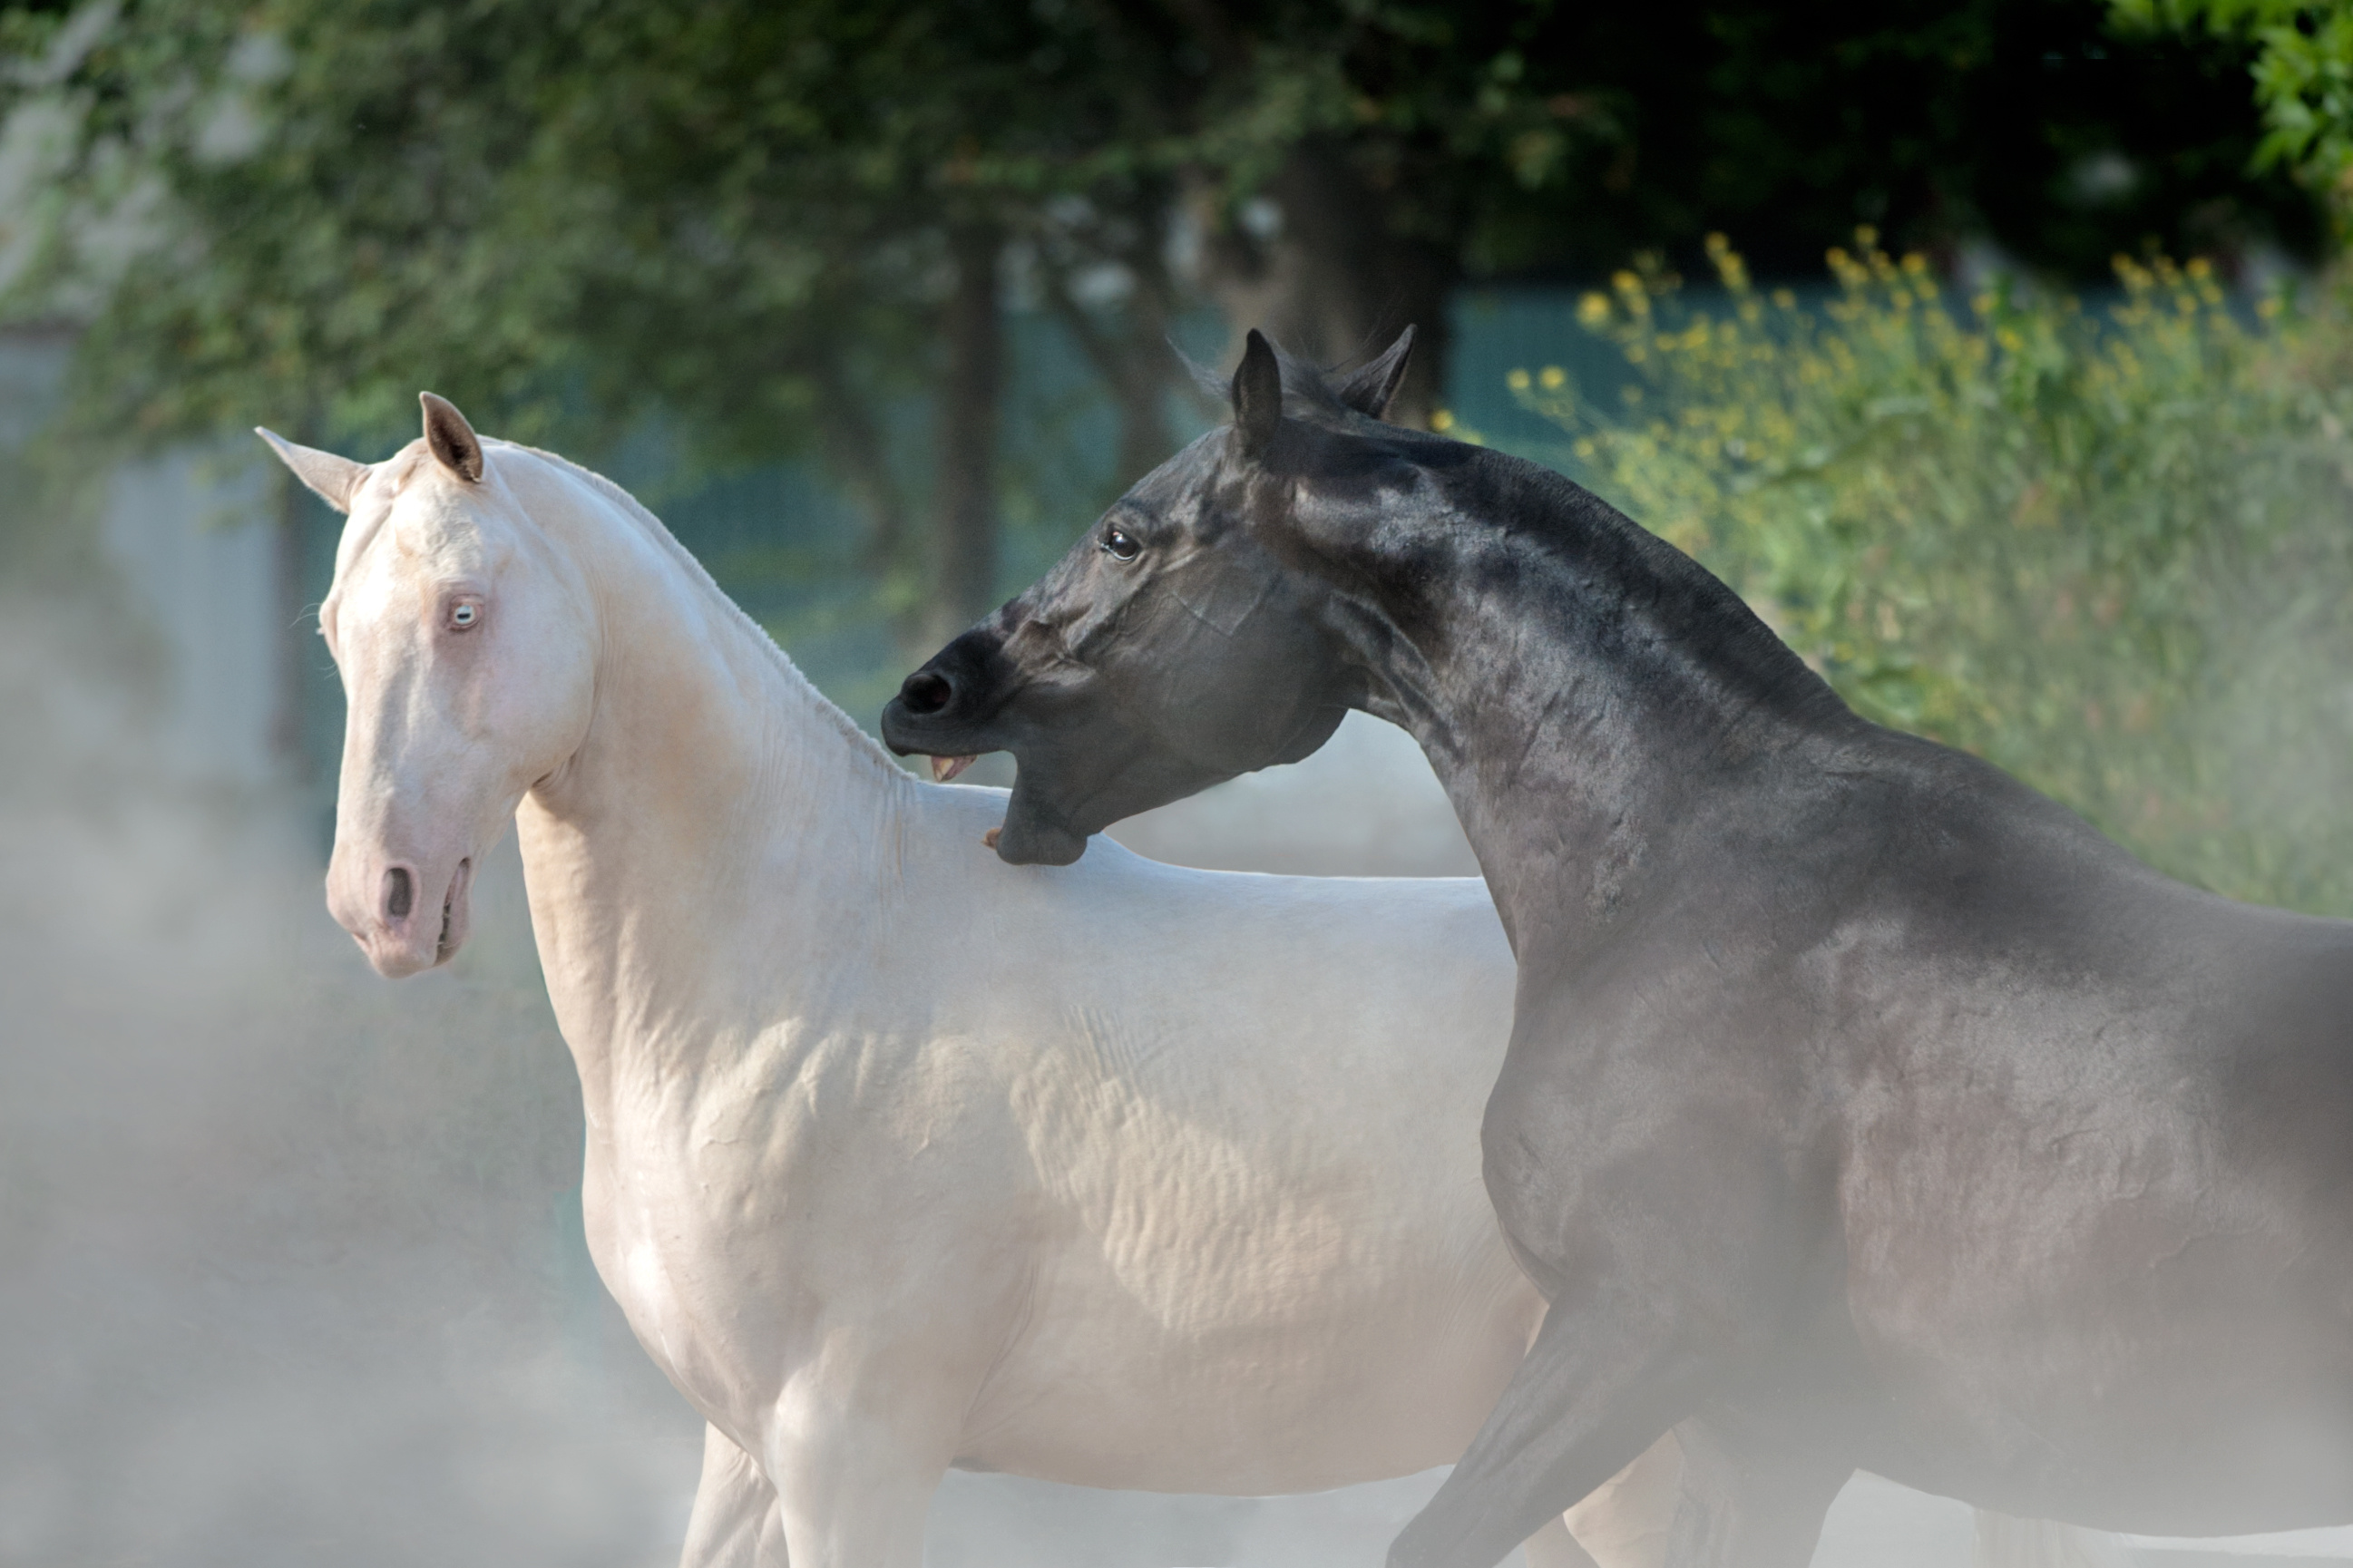 A black horse biting a white horse's neck.